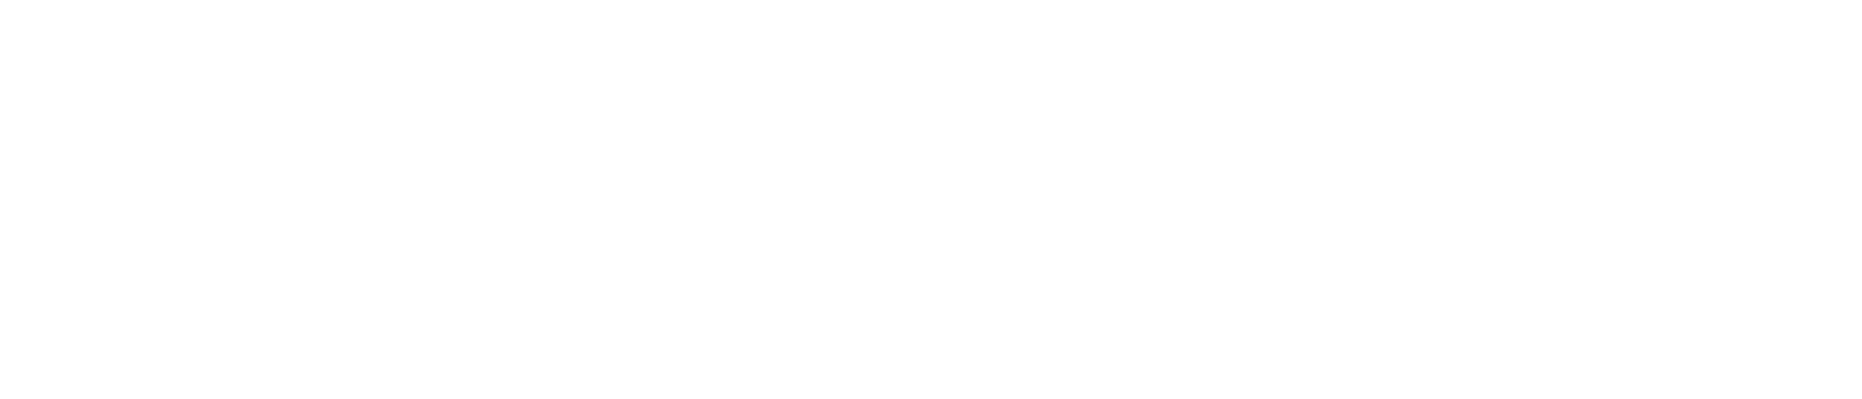 Virtual Virginia